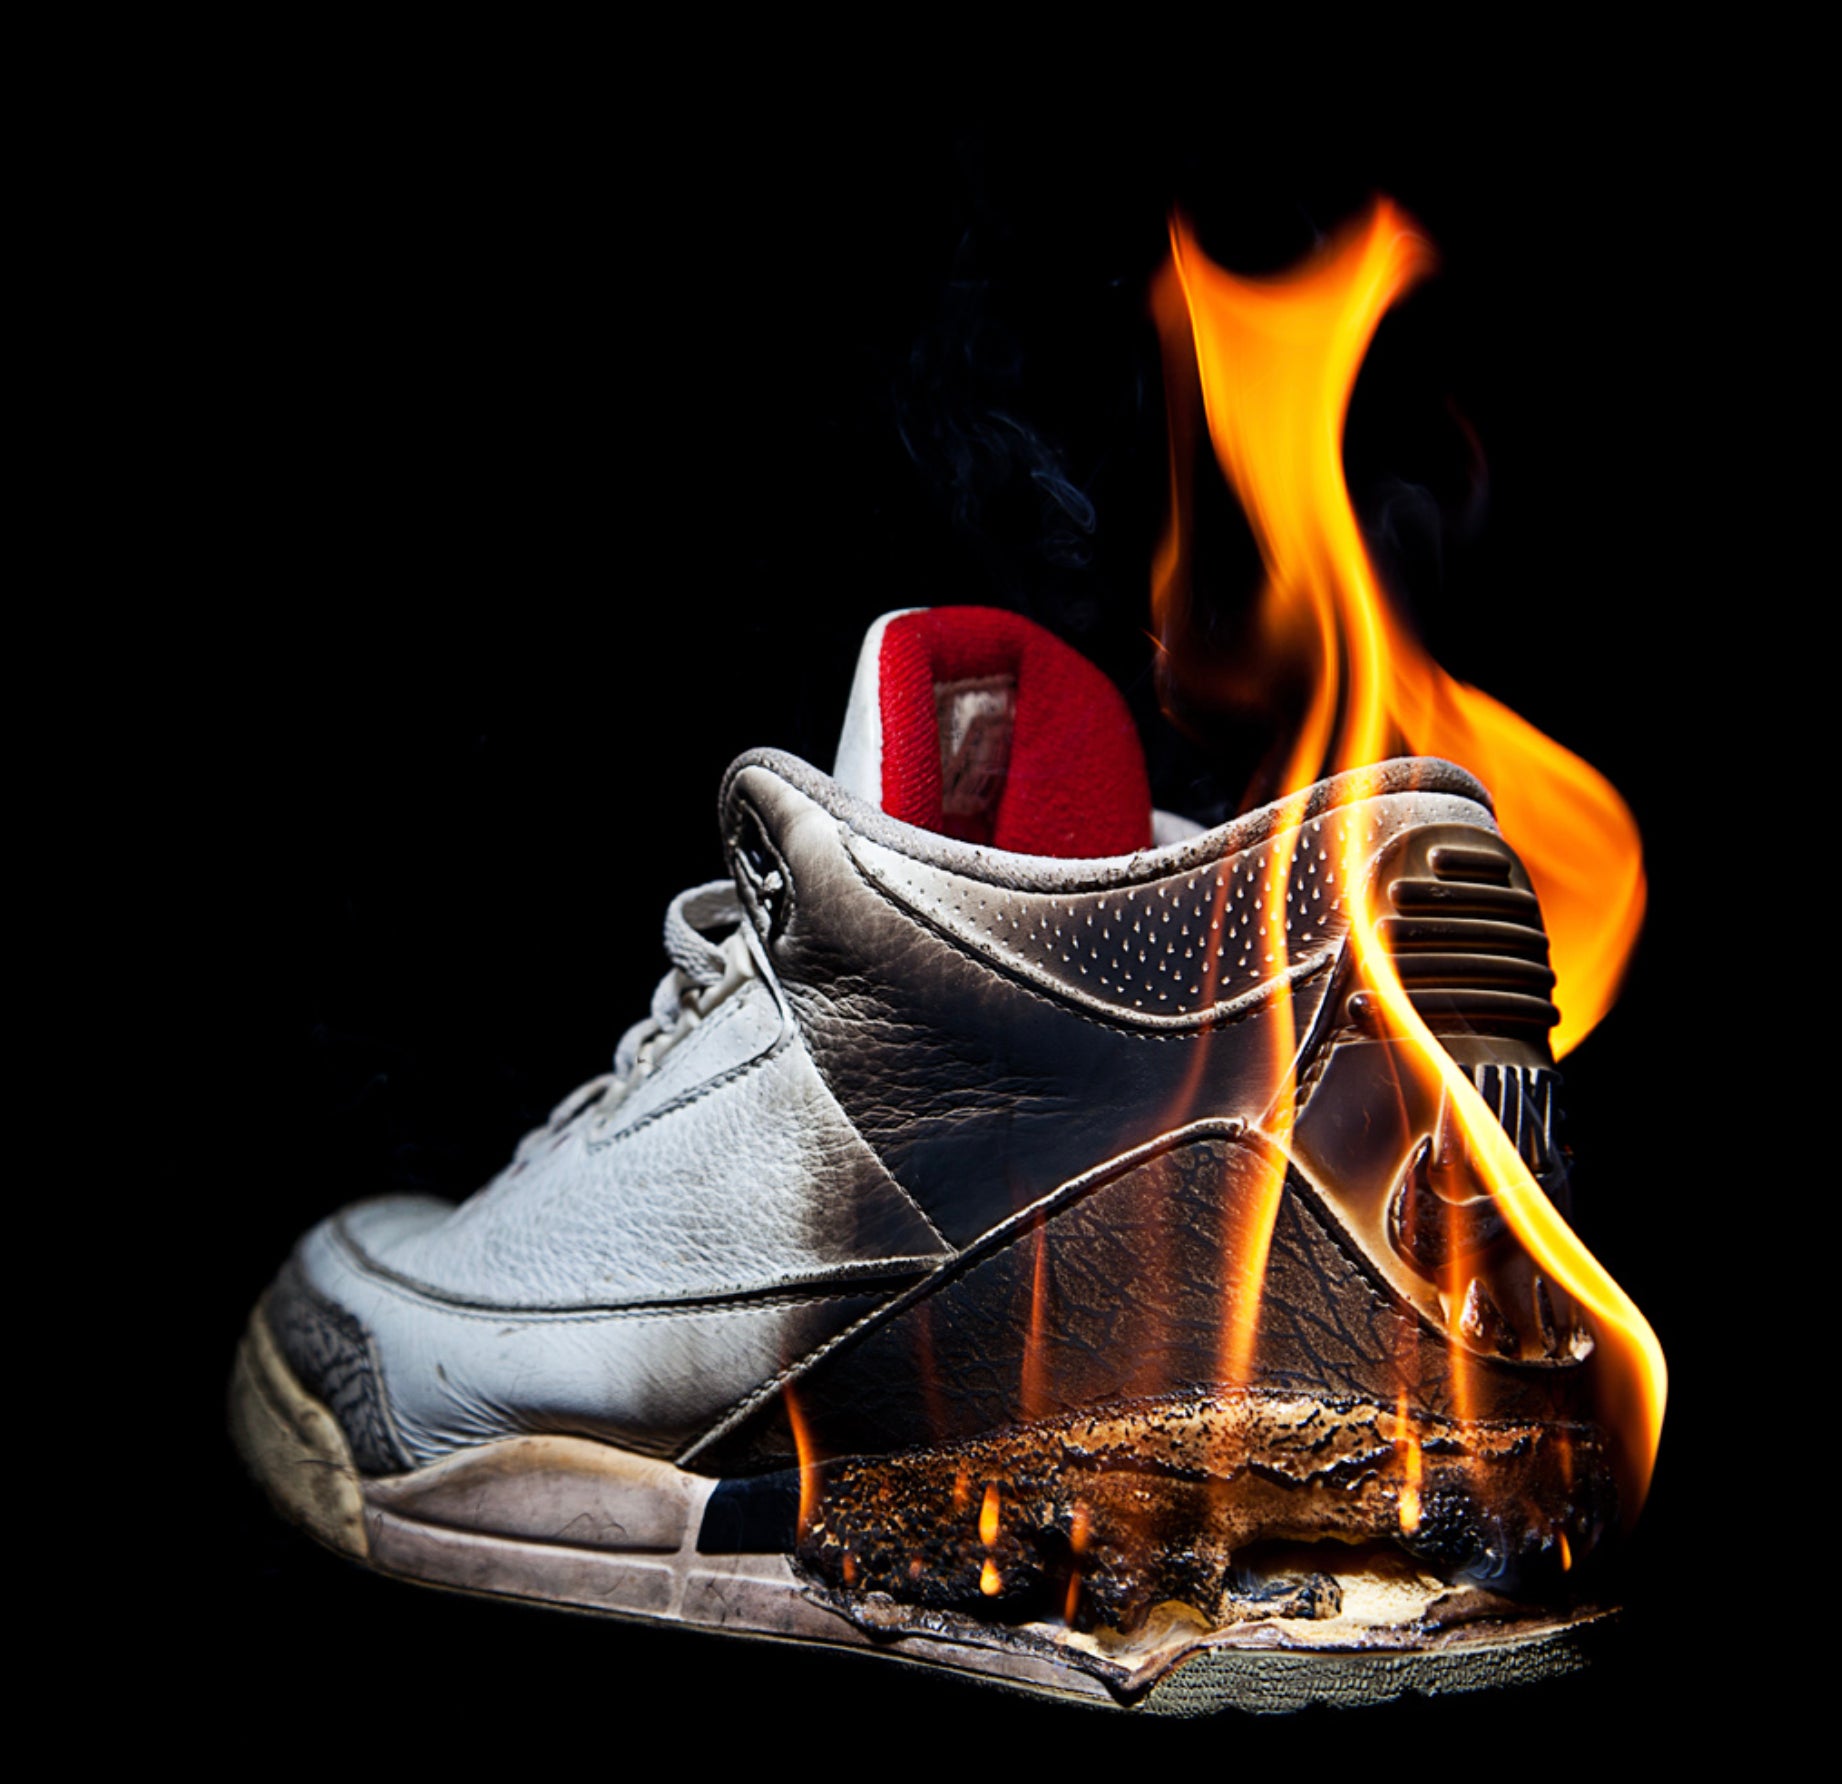 Sneakers on fire